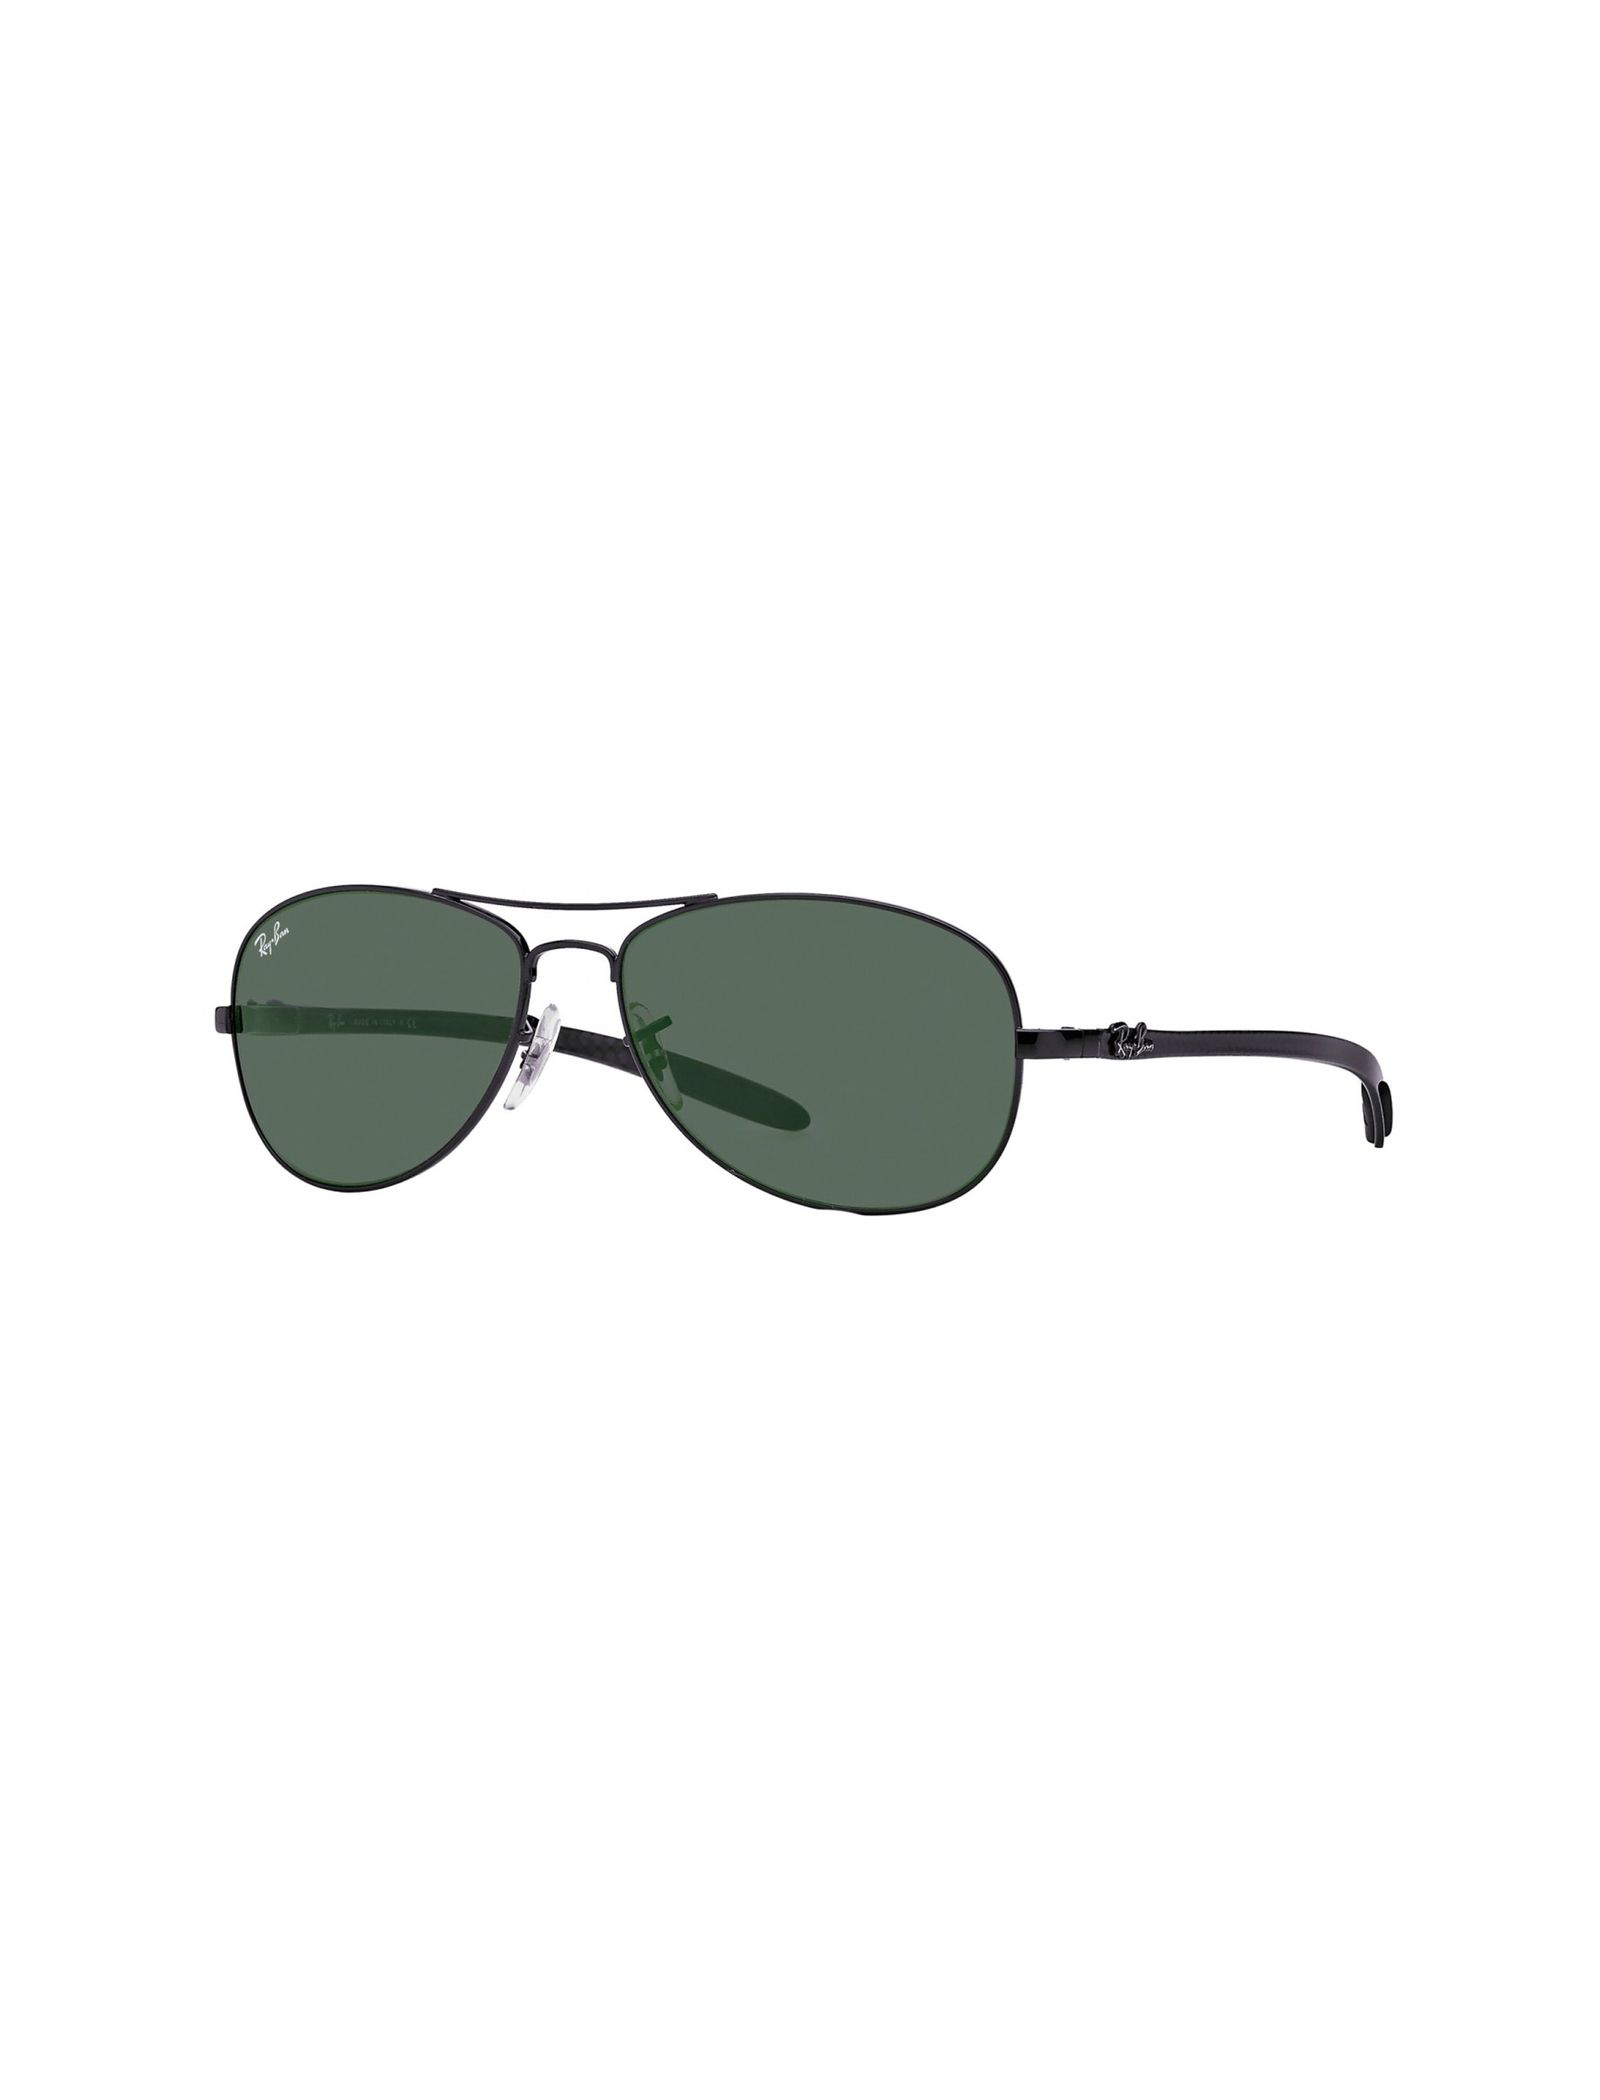 عینک آفتابی ری بن مدل 8301-2 - مشکی - 3